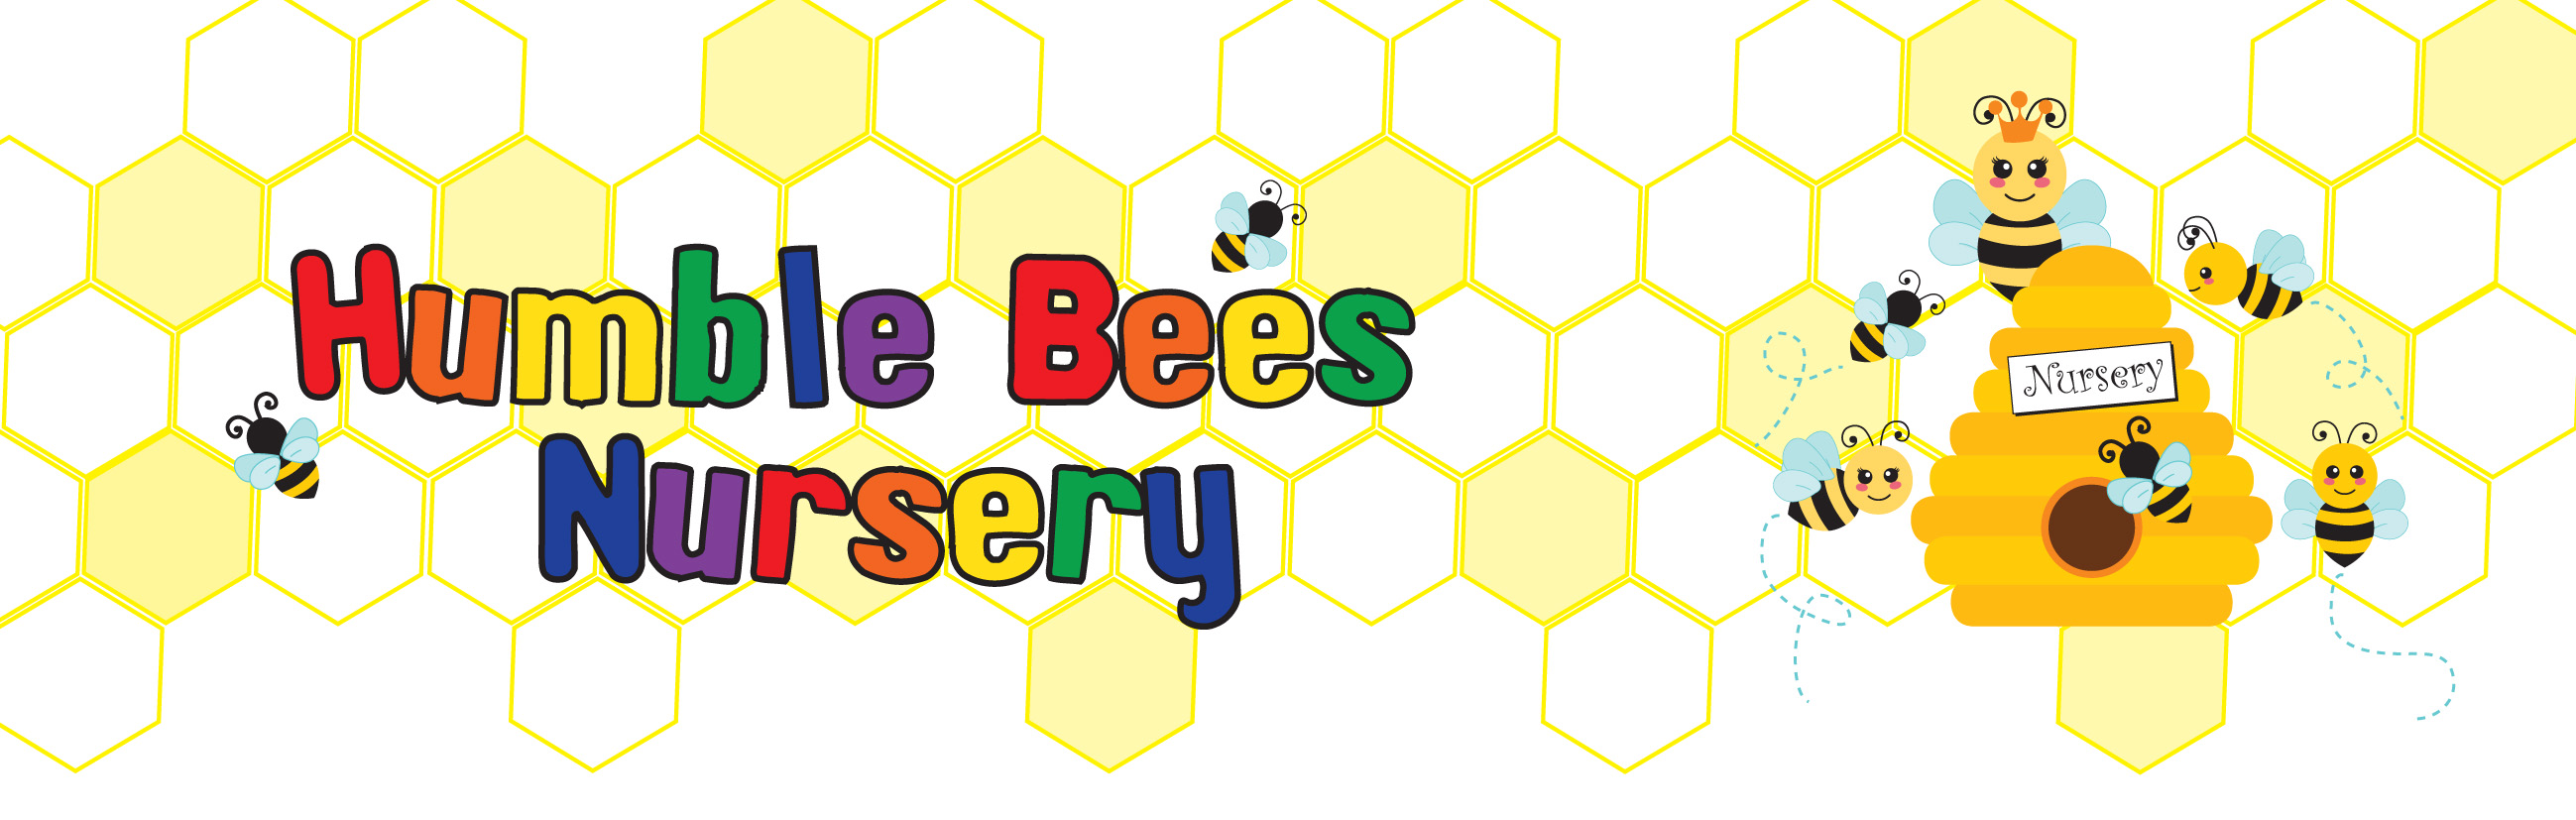 Humble Bees Nursery